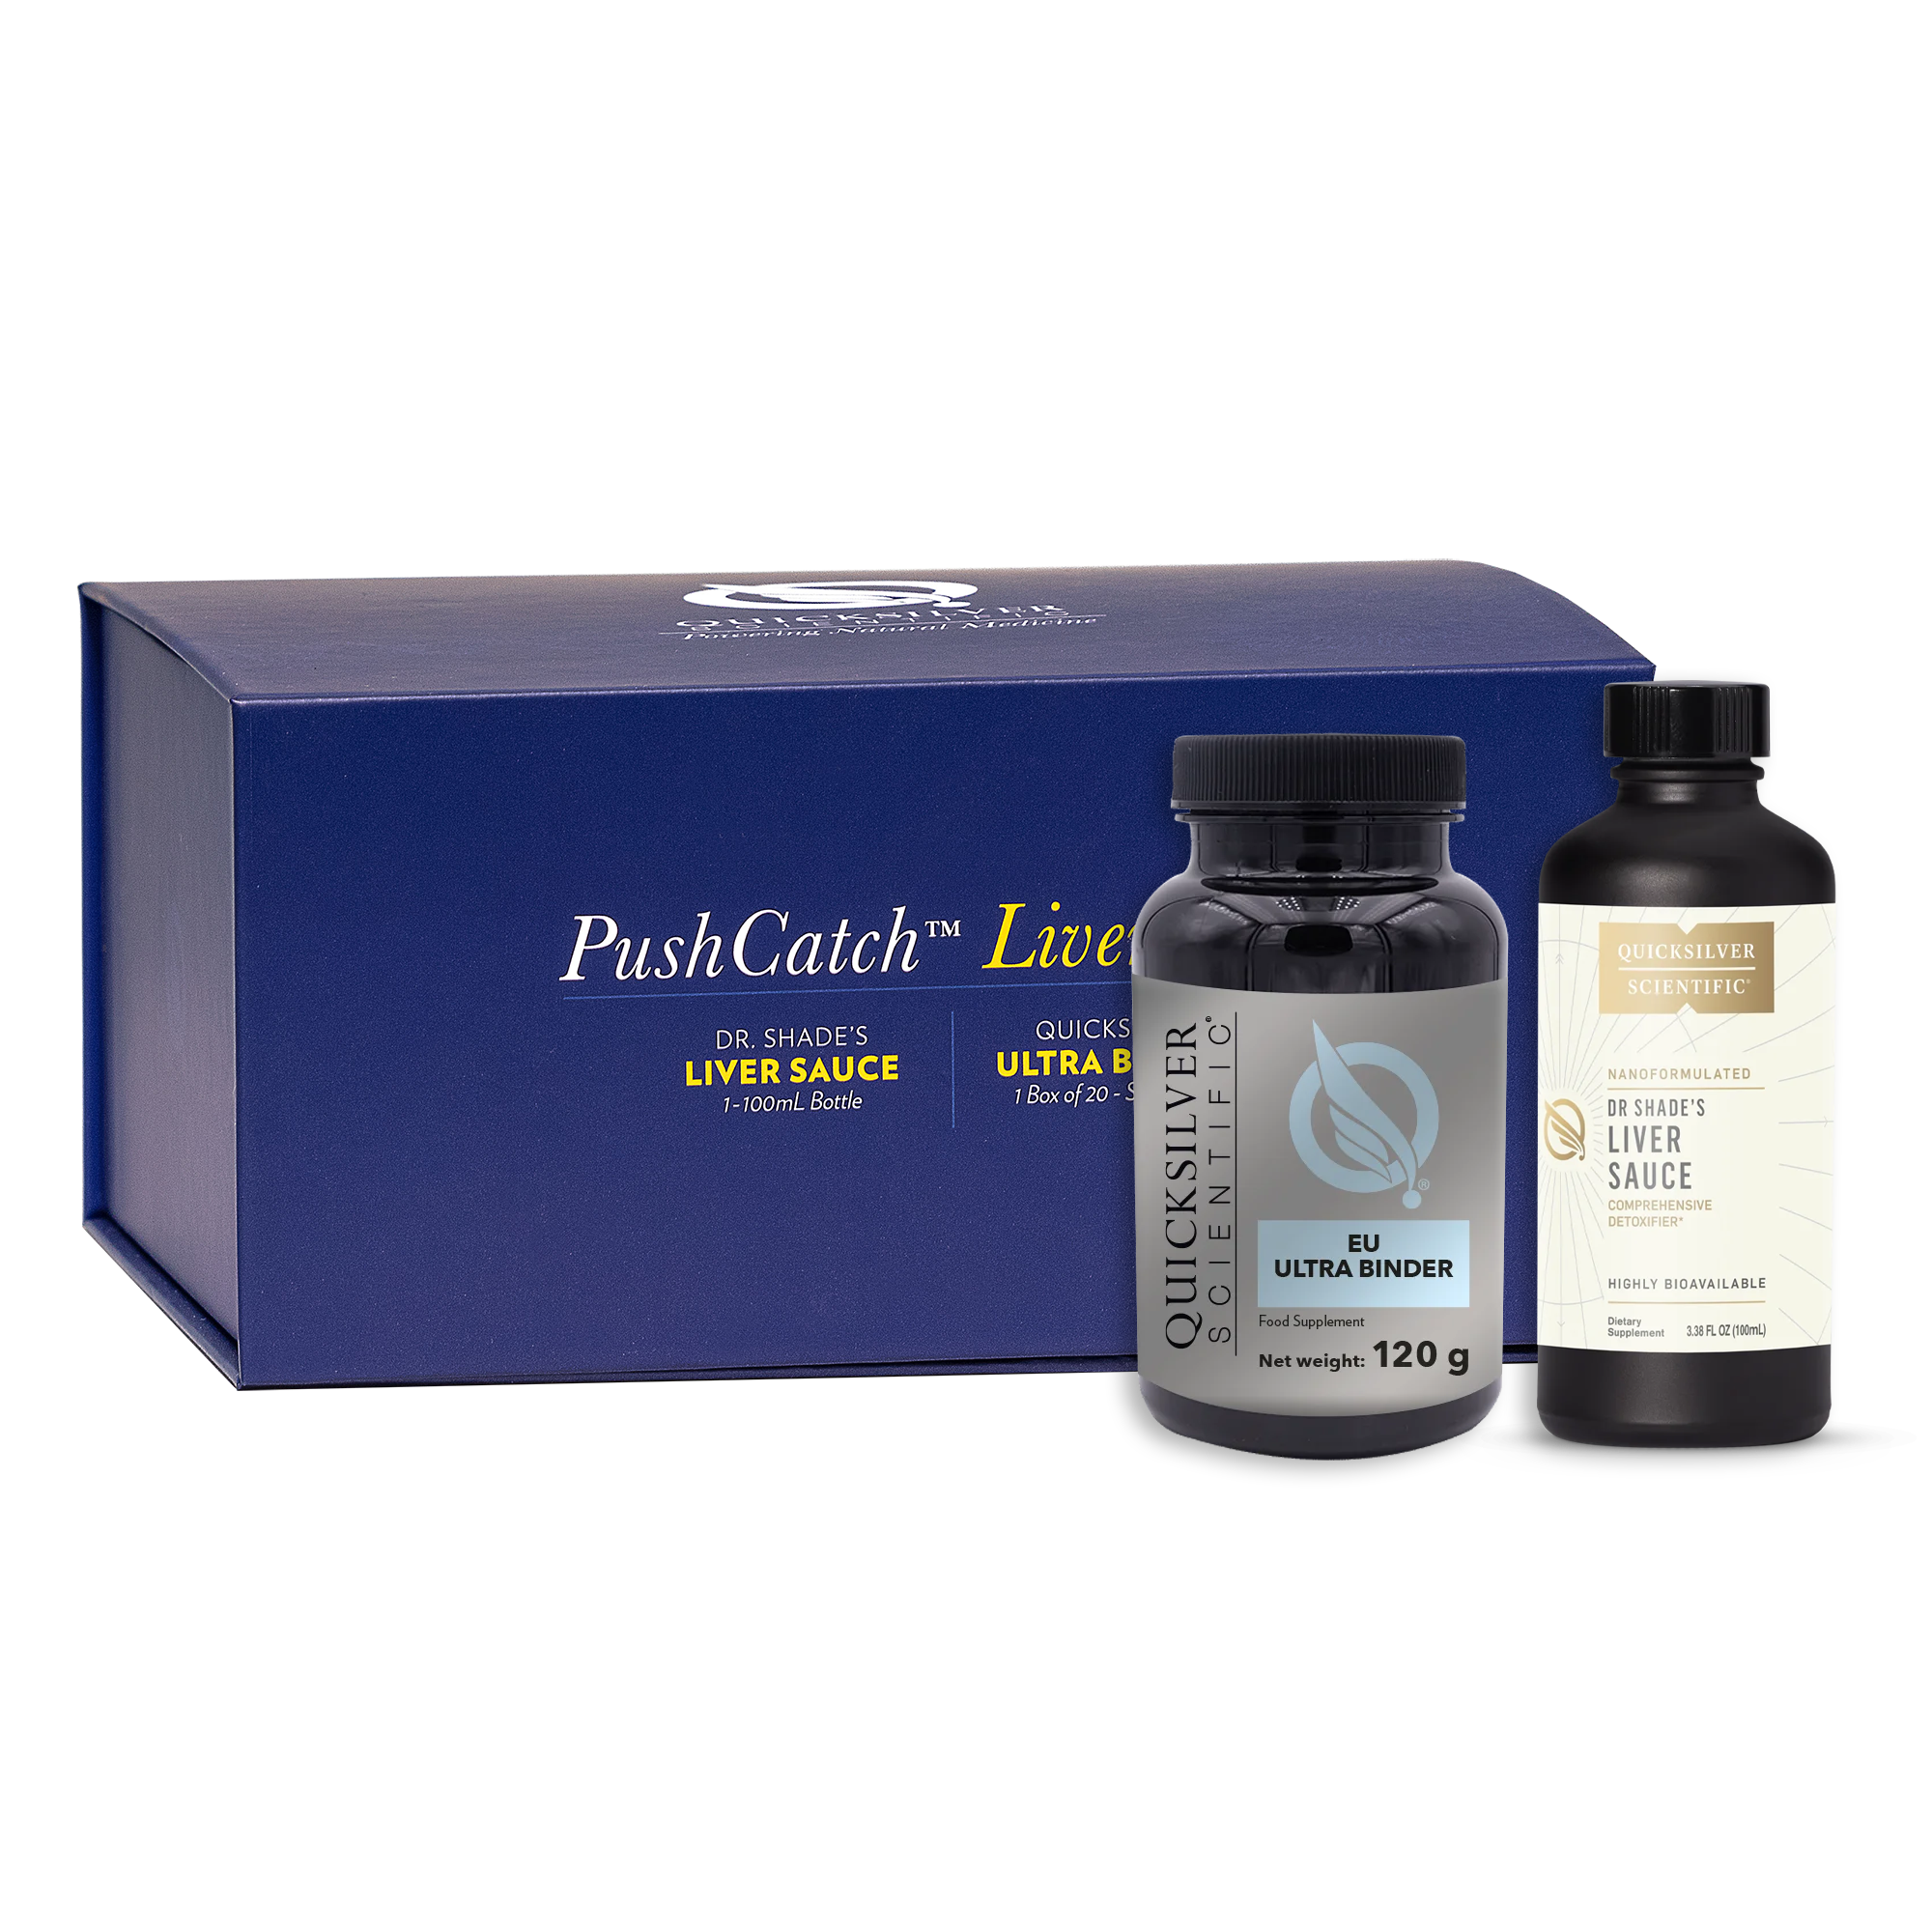 Quicksilver Scientific PushCatch® Liver Detox, two-piece kit for simple, flexible, effective & healthy liver detox